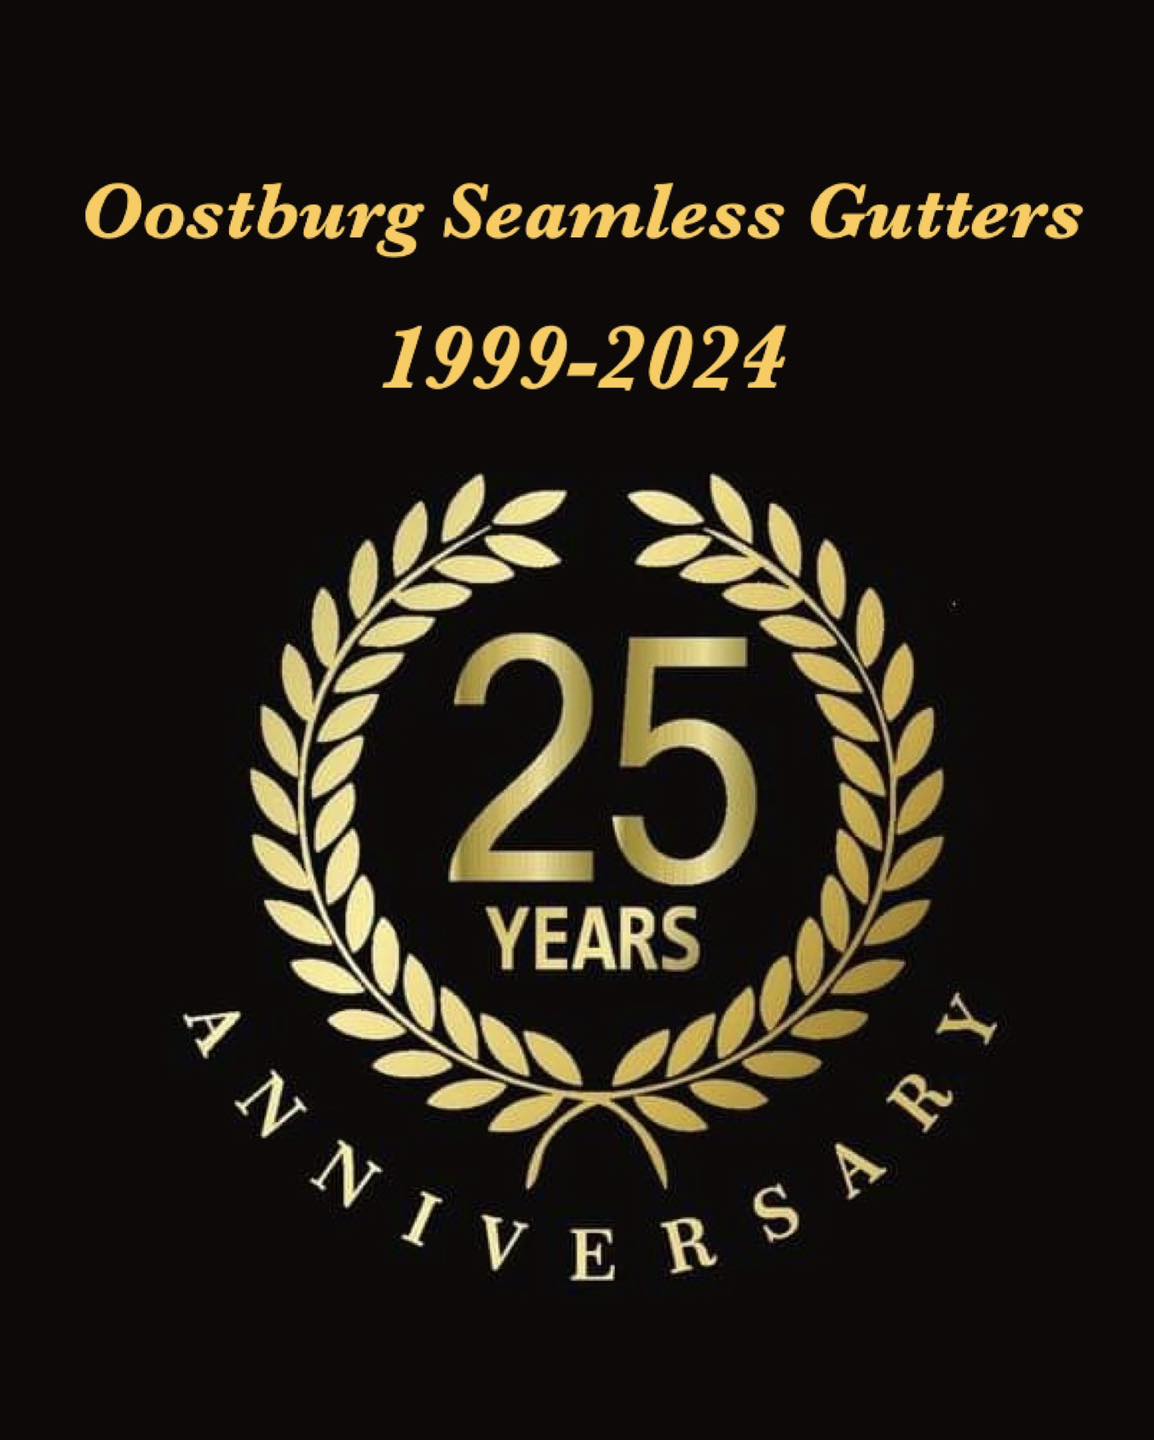 Oostburg Seamless Gutters 4731 Wilson Lima Rd #2056, Oostburg Wisconsin 53070